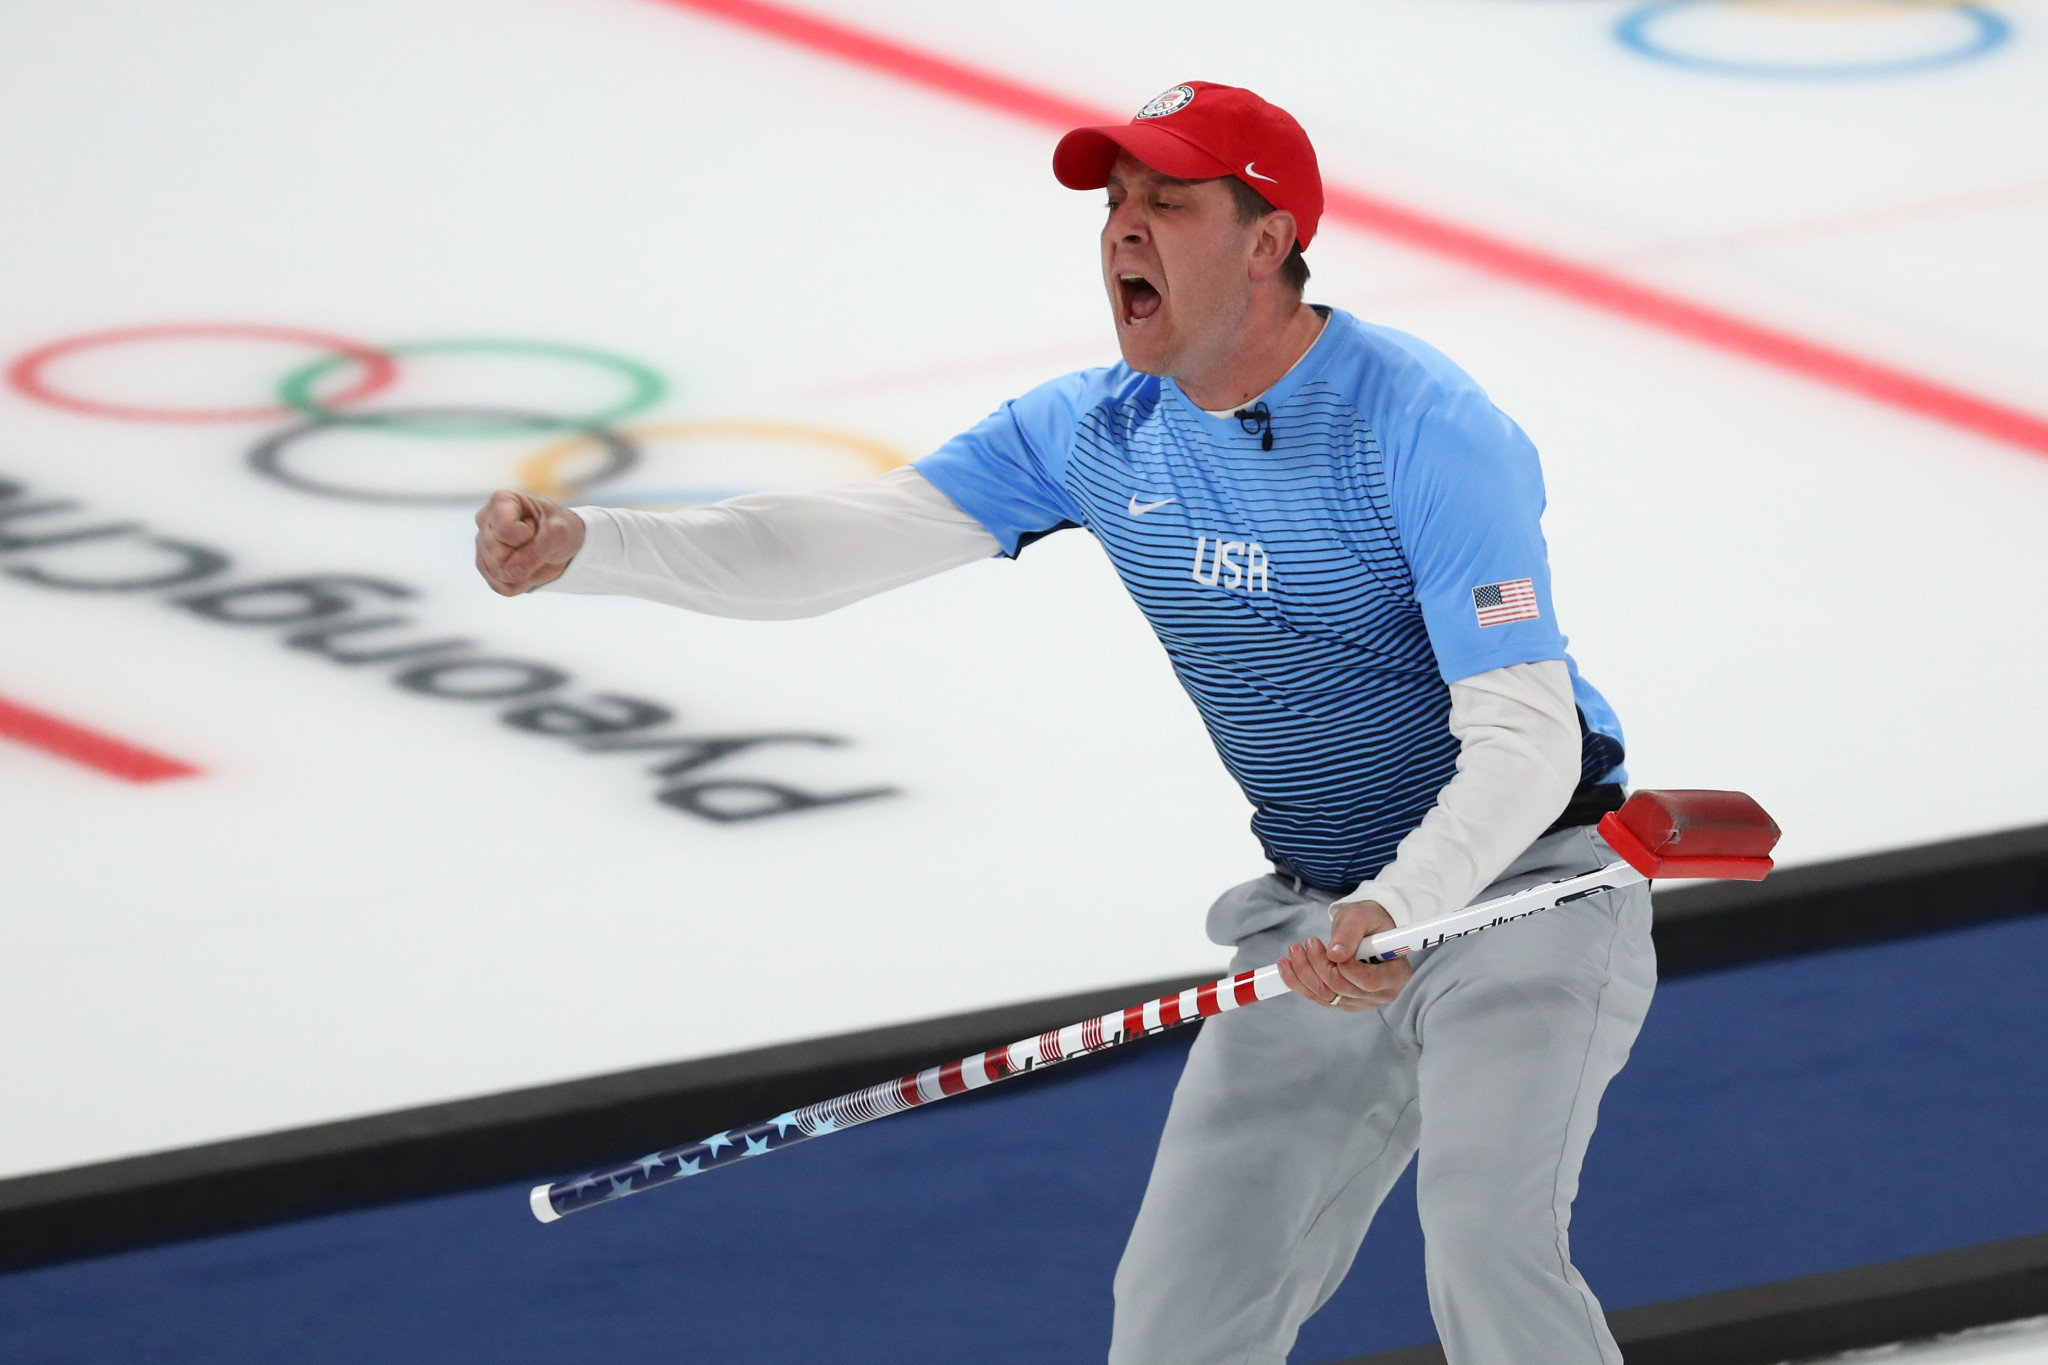 USA Curling reveals Beijing 2022 qualification process